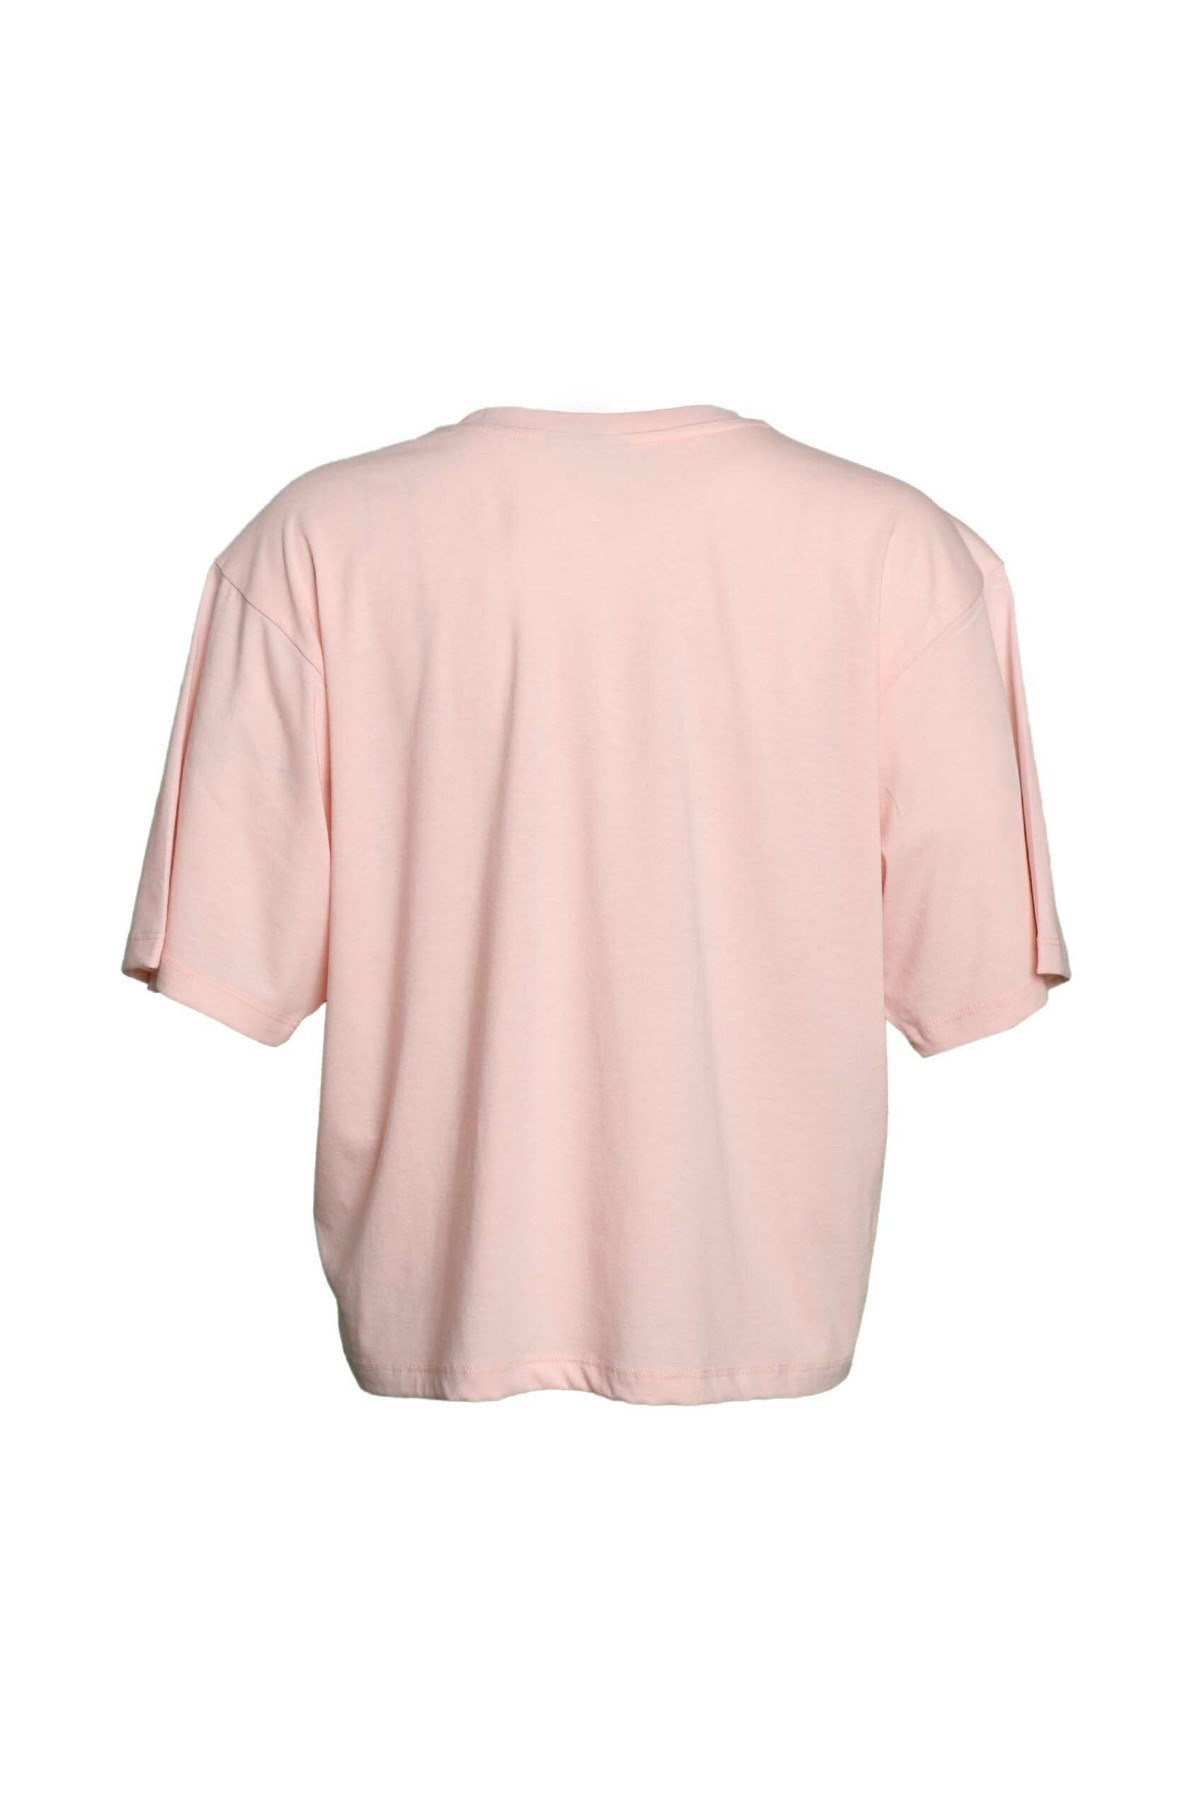 Hummel Kadın T-Shirt 911407-3026 Sılver Pınk